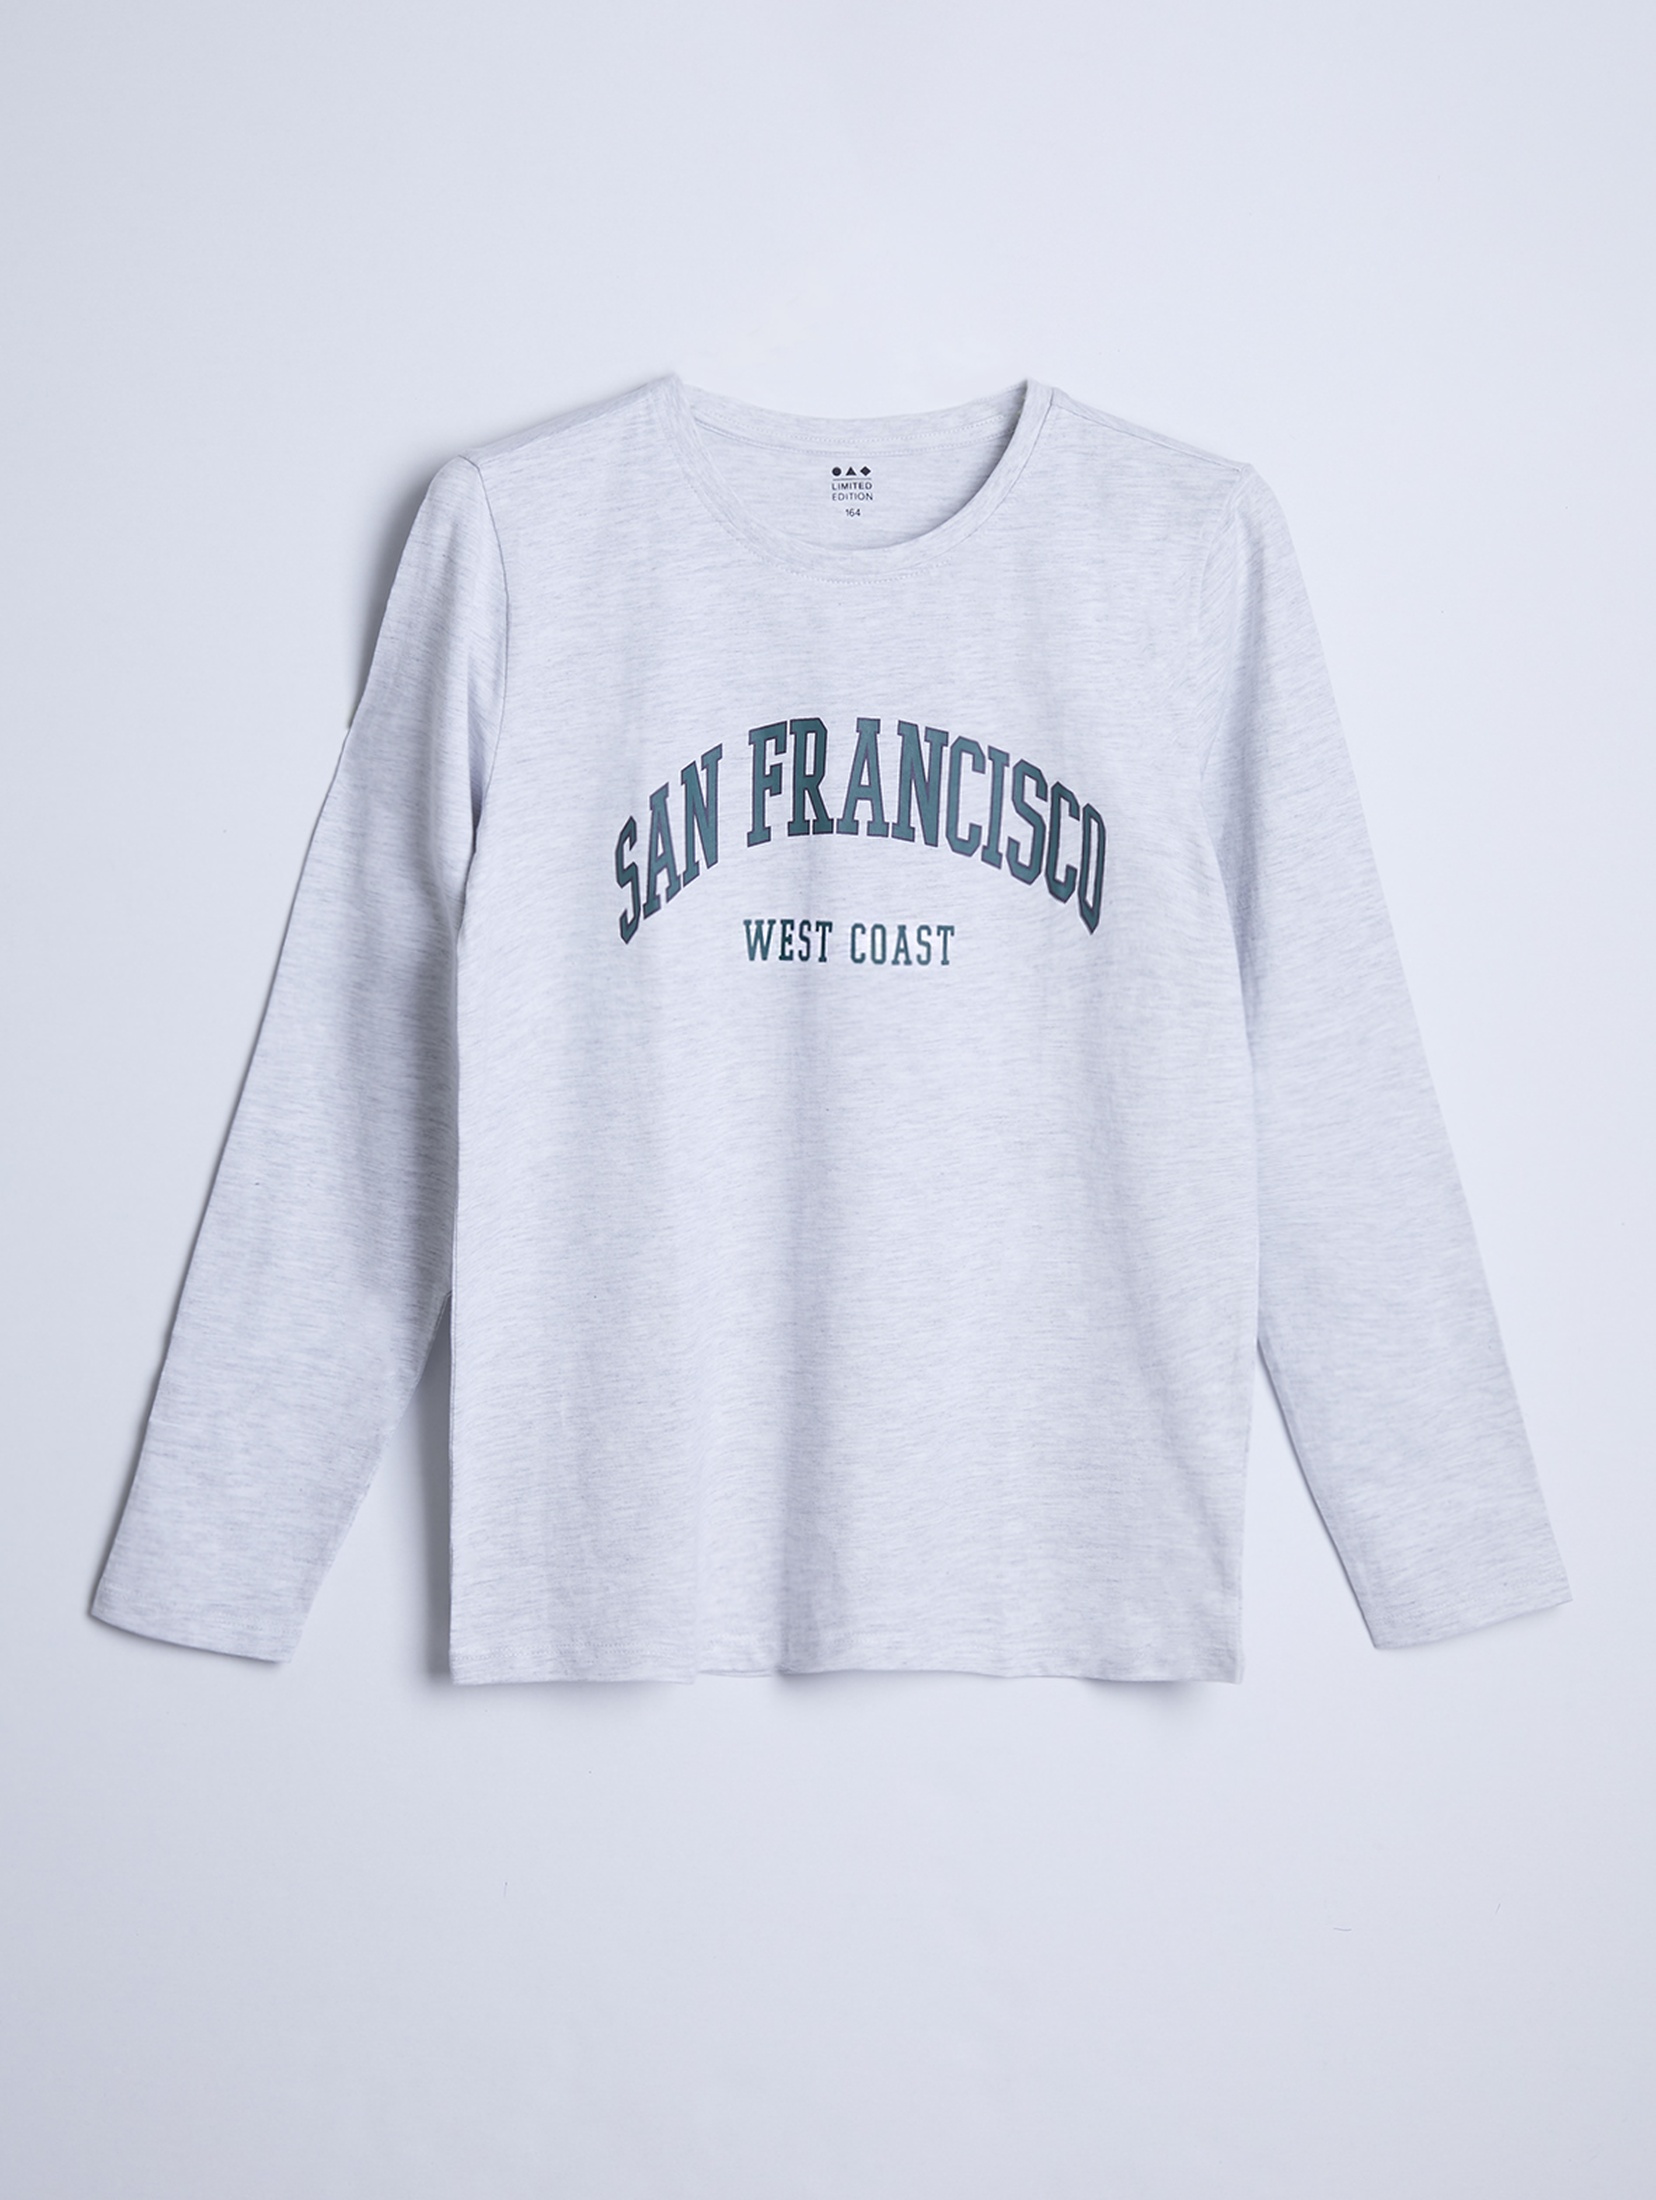 Dzianinowe bluzki San Francisco i w paski - unisex - Limited Edition